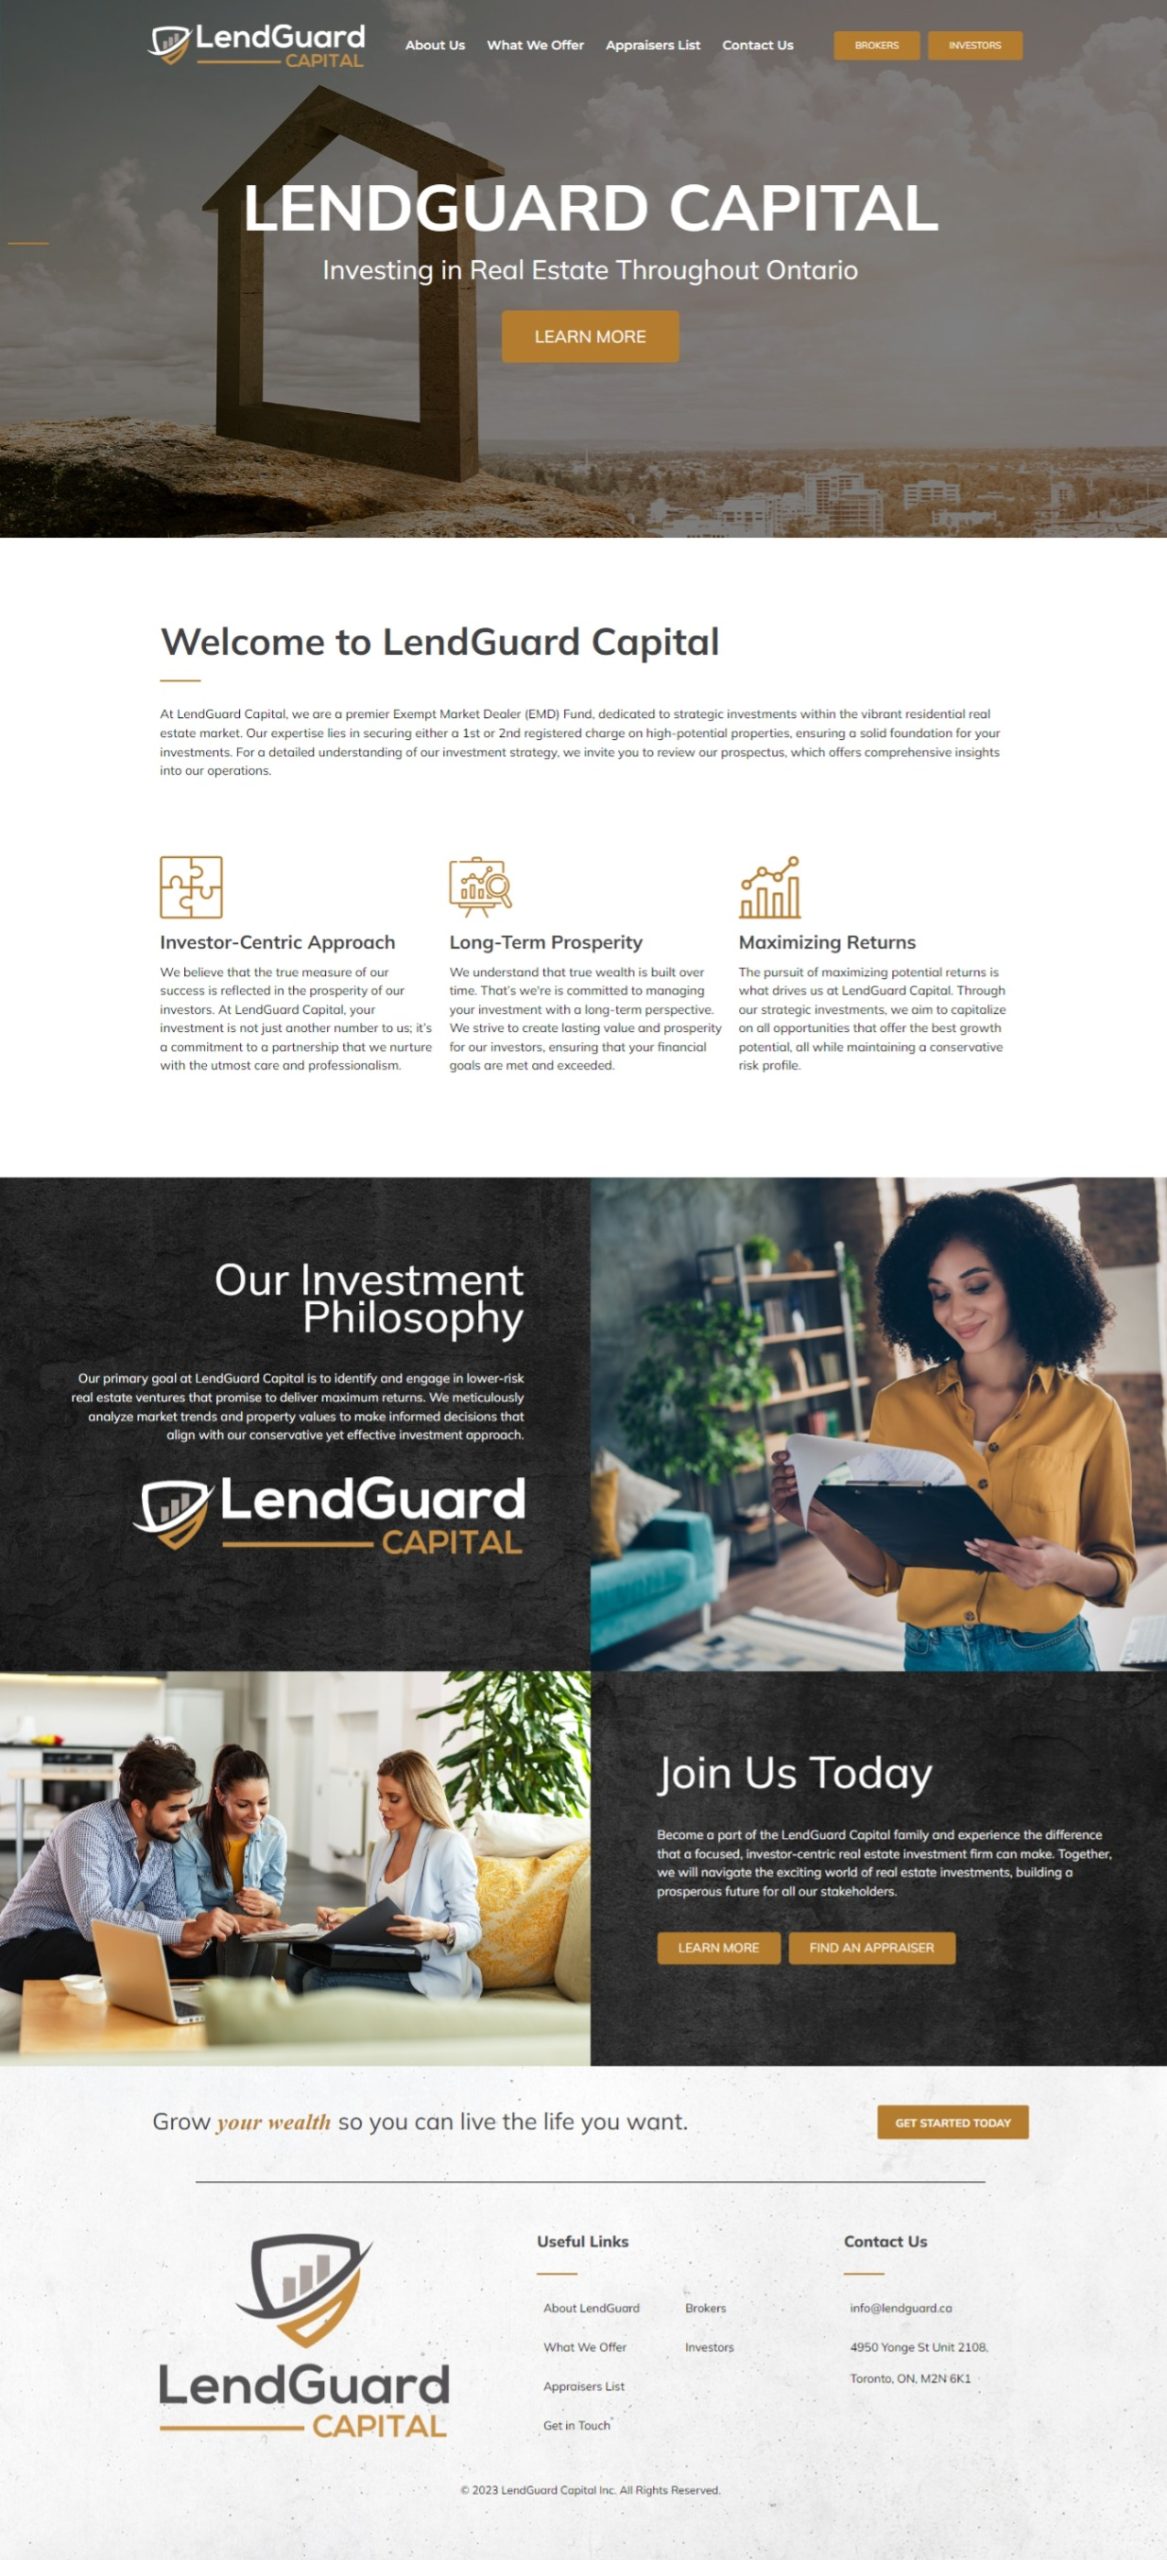 LendGuard Capital